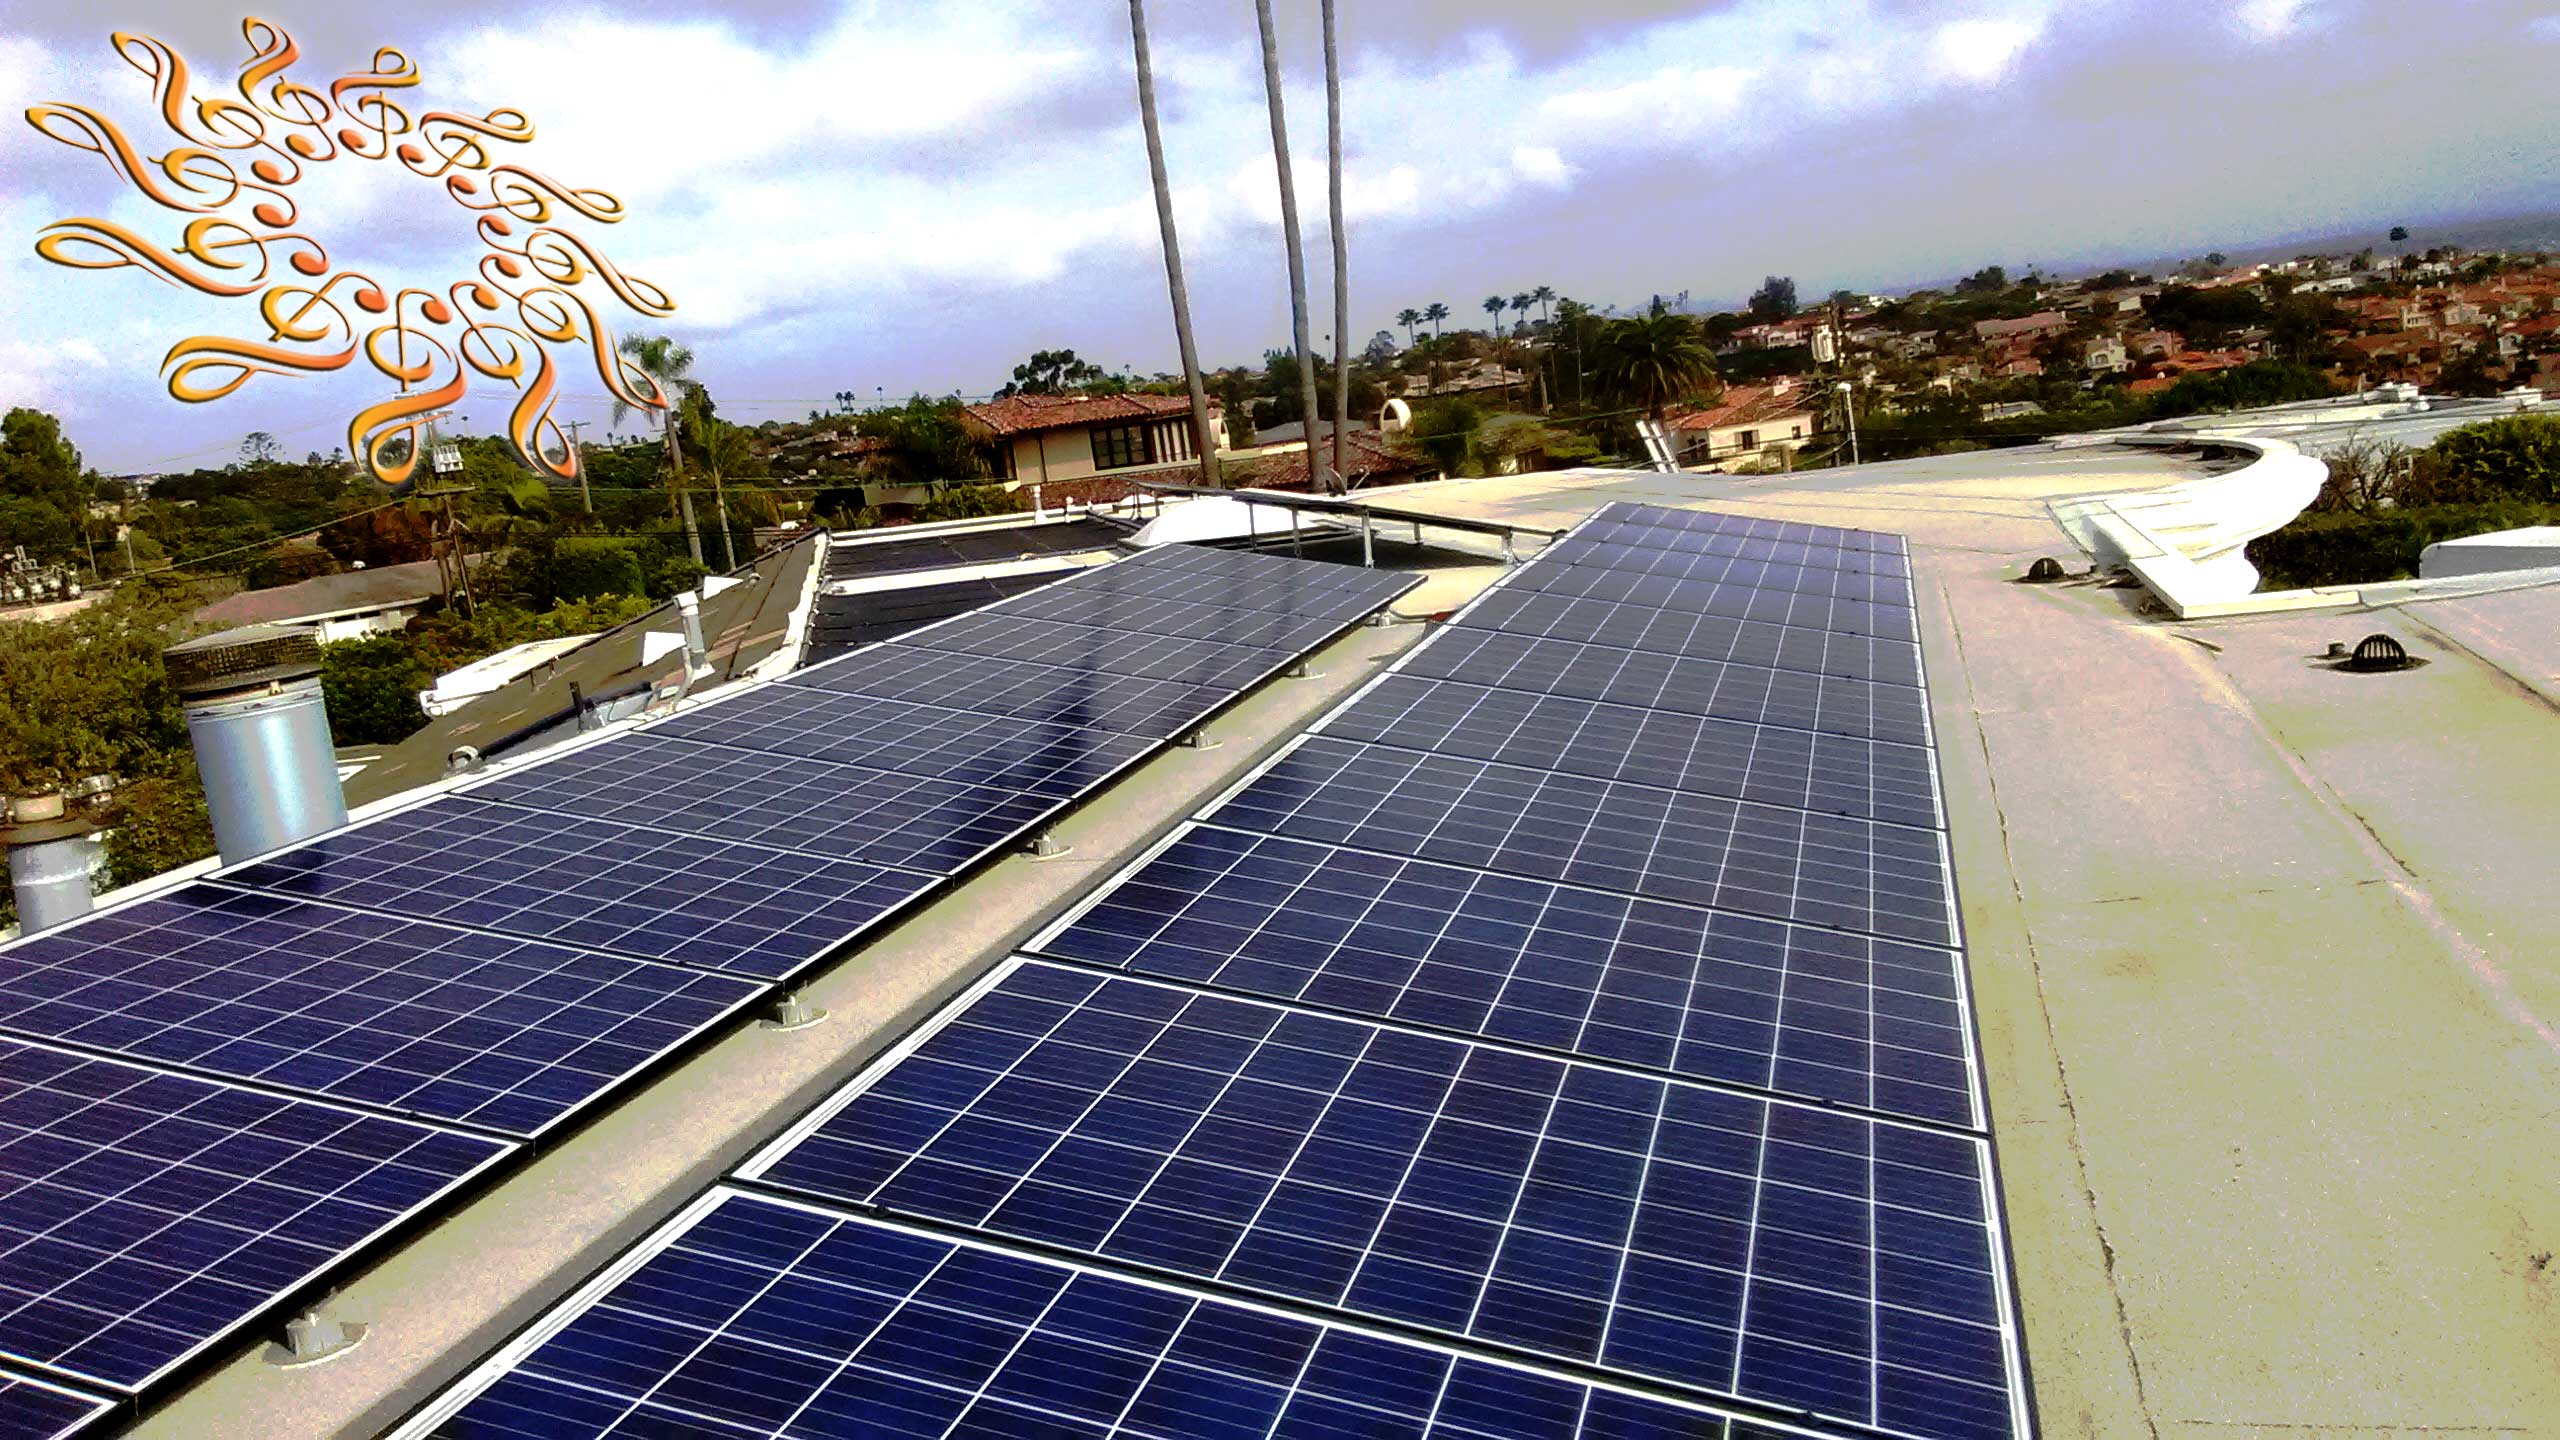 One of the Best Solar Companies in La Jolla, California? You decide ...